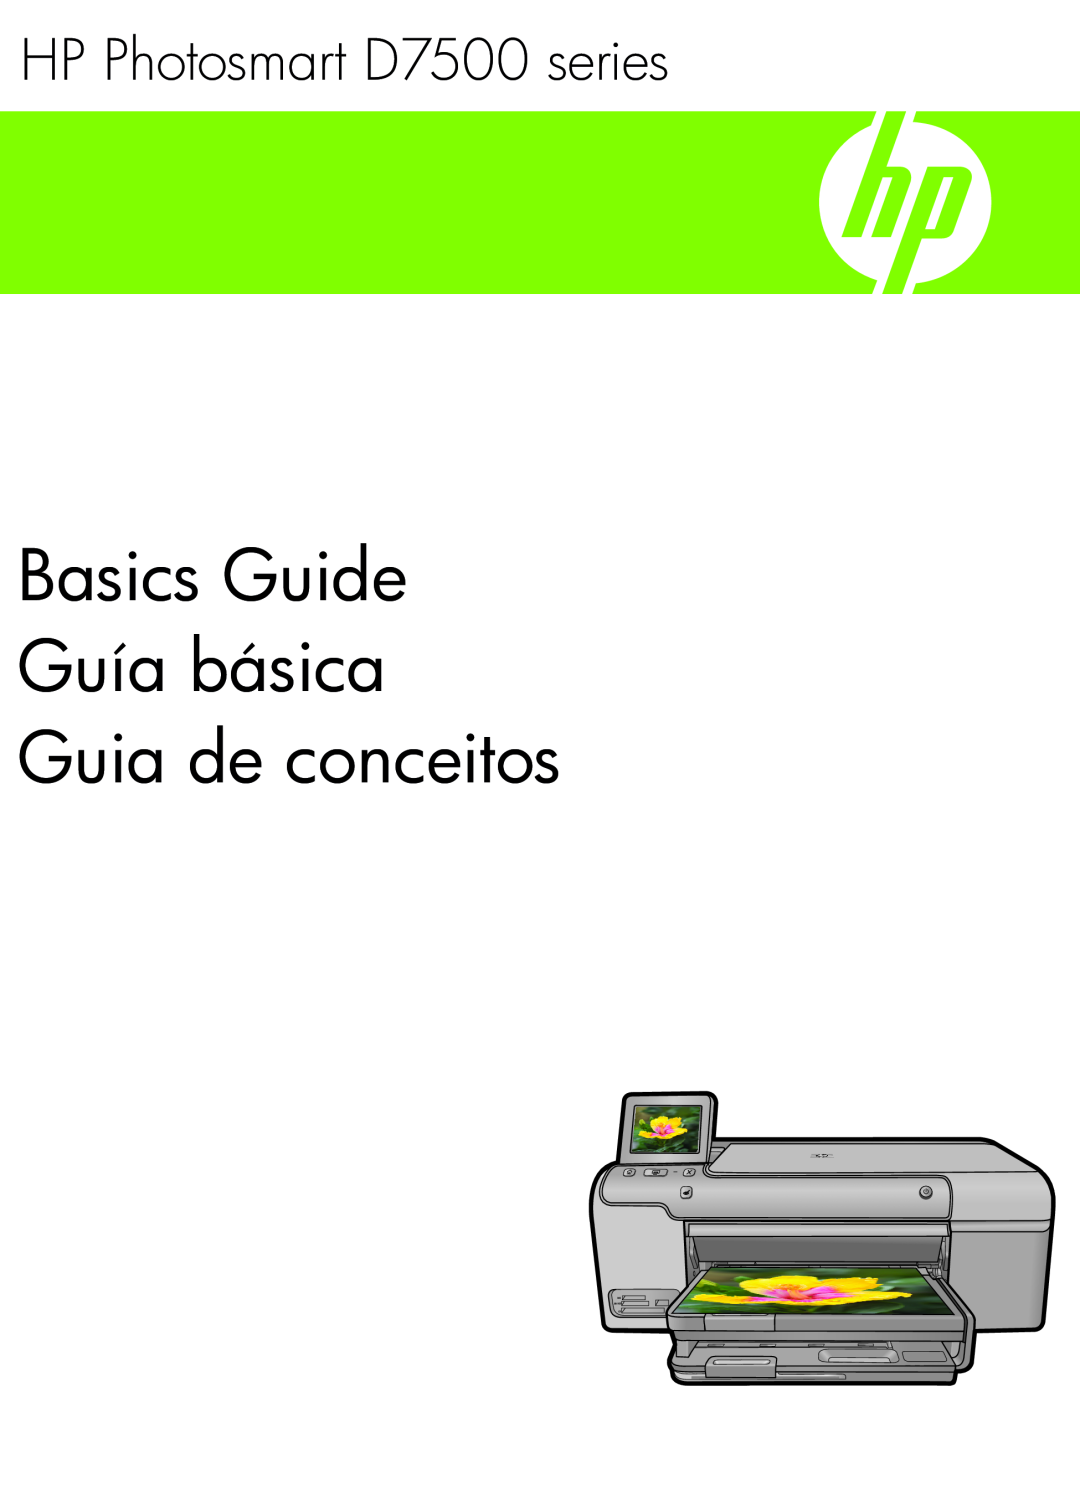 HP D7560 manual Basics Guide Guía básica Guia de conceitos, HP Photosmart D7500 series 